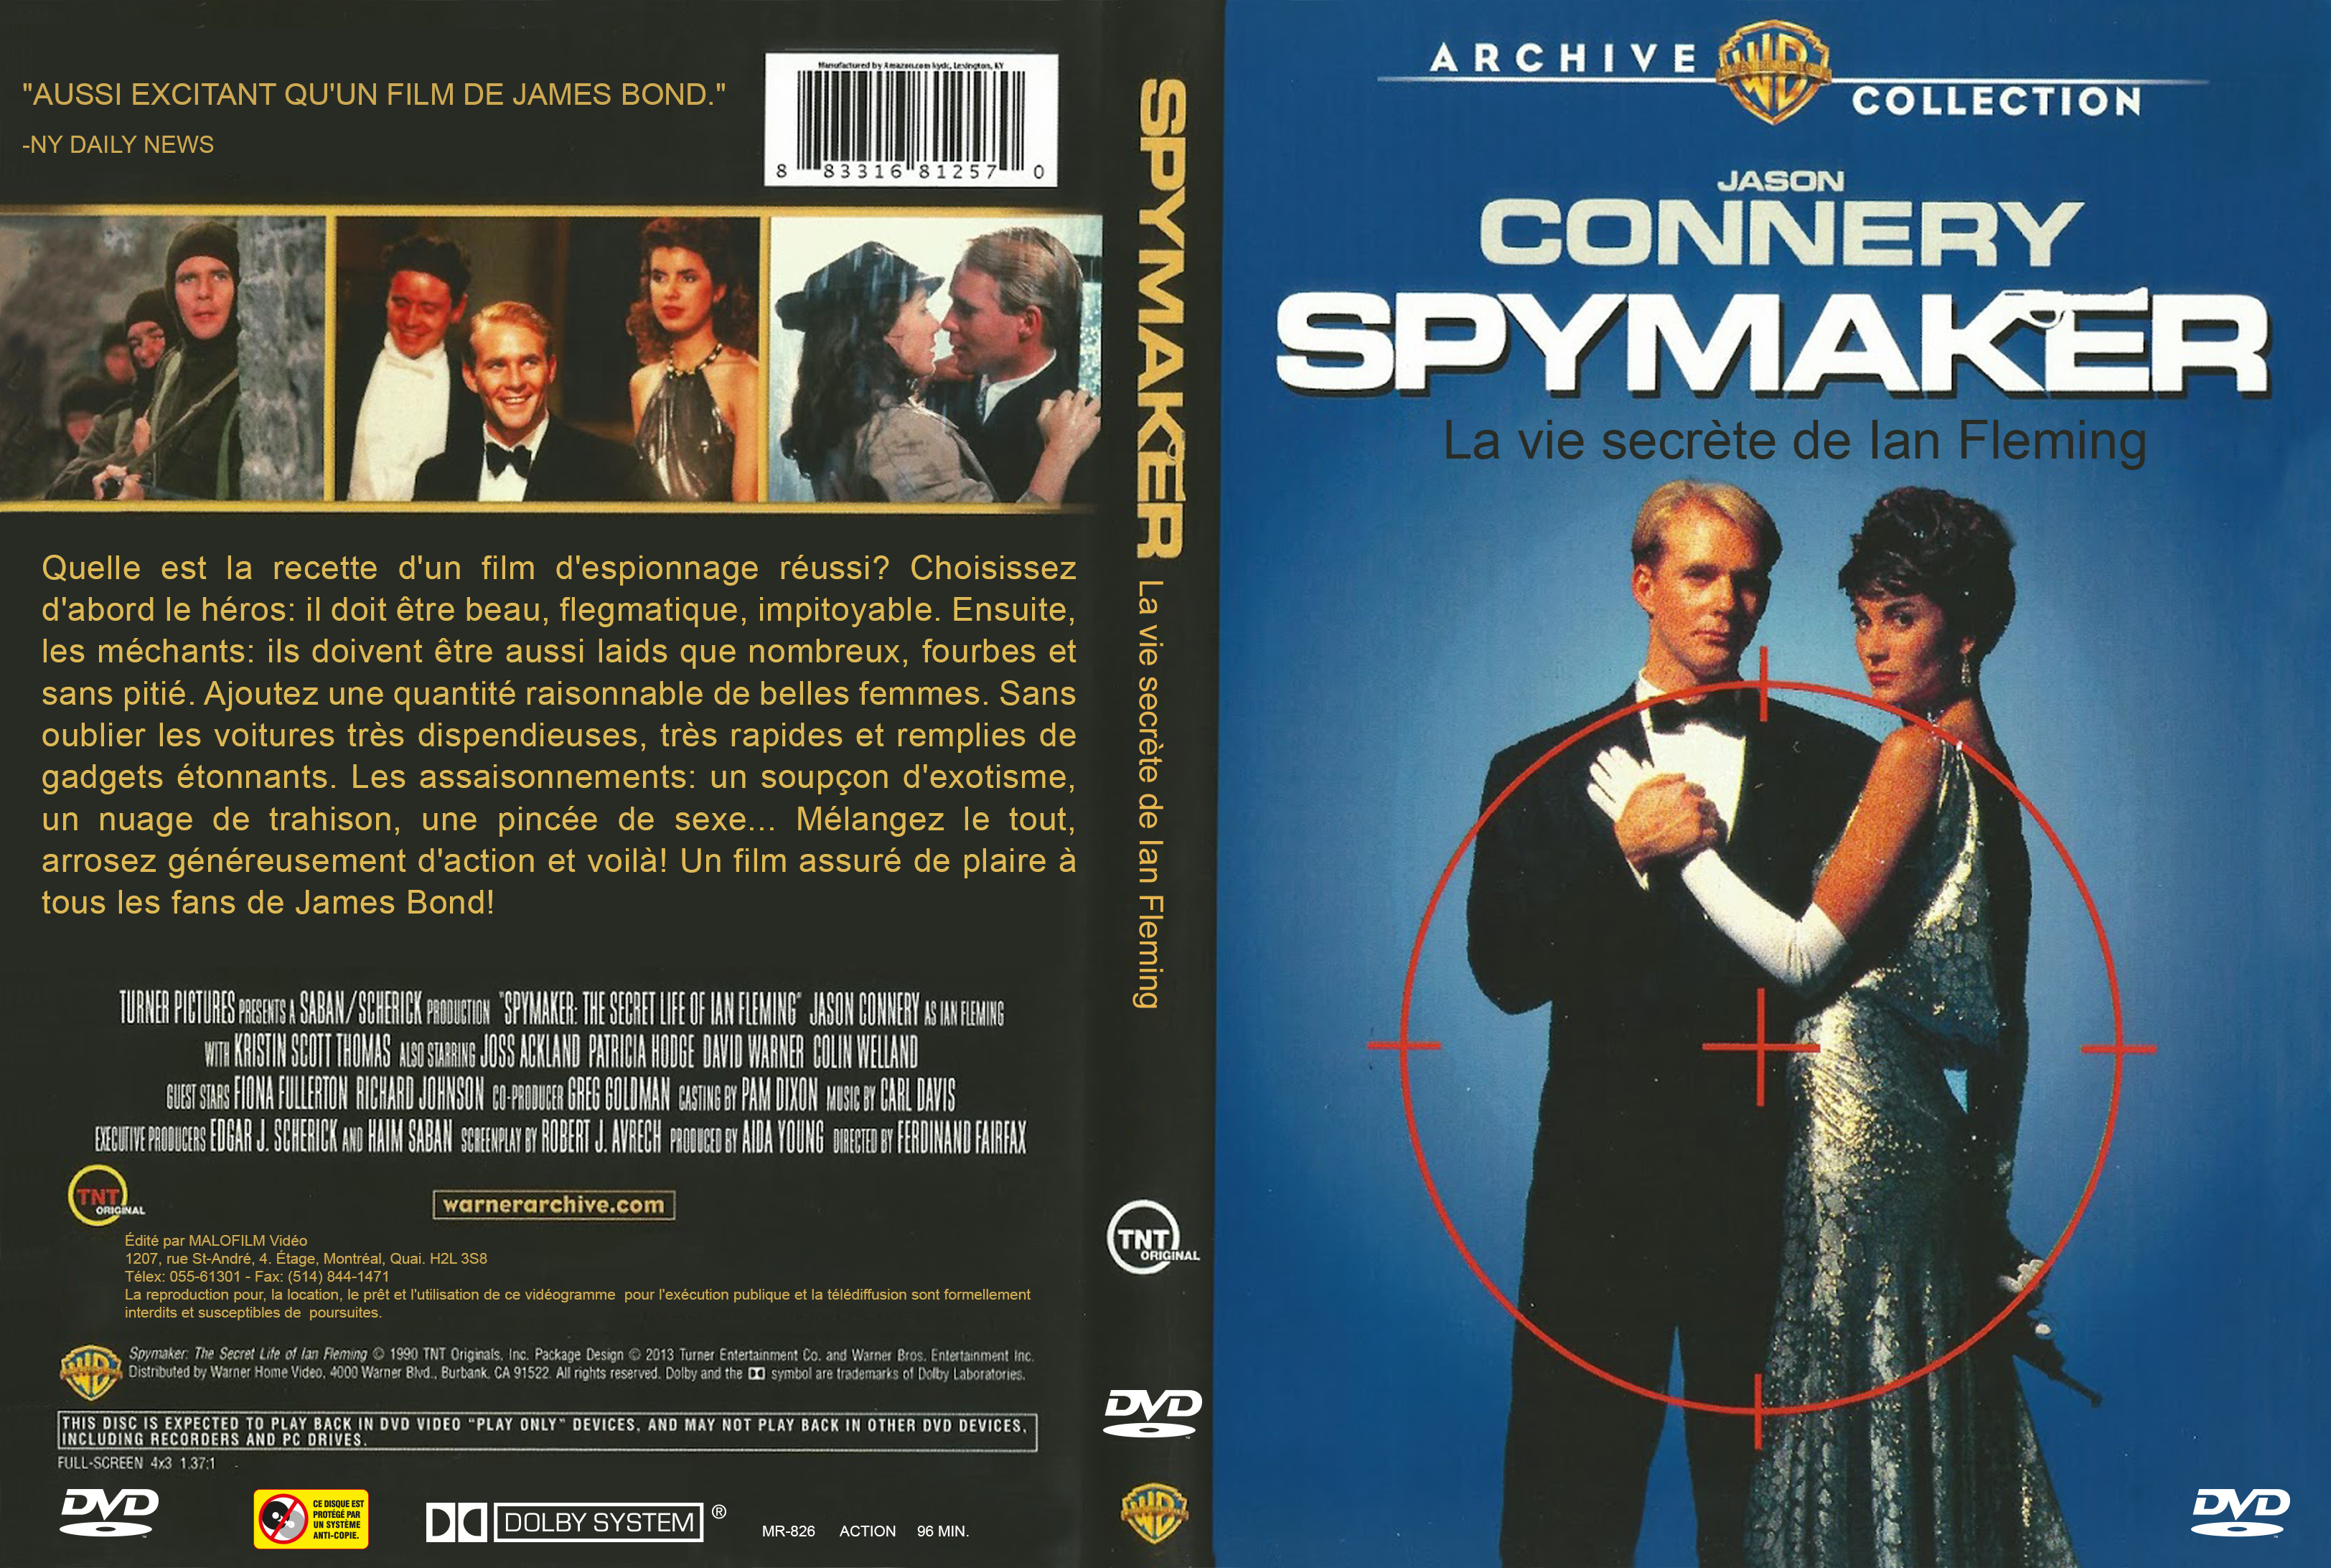 Jaquette DVD Spymaker - La vie secrete de Ian Fleming custom